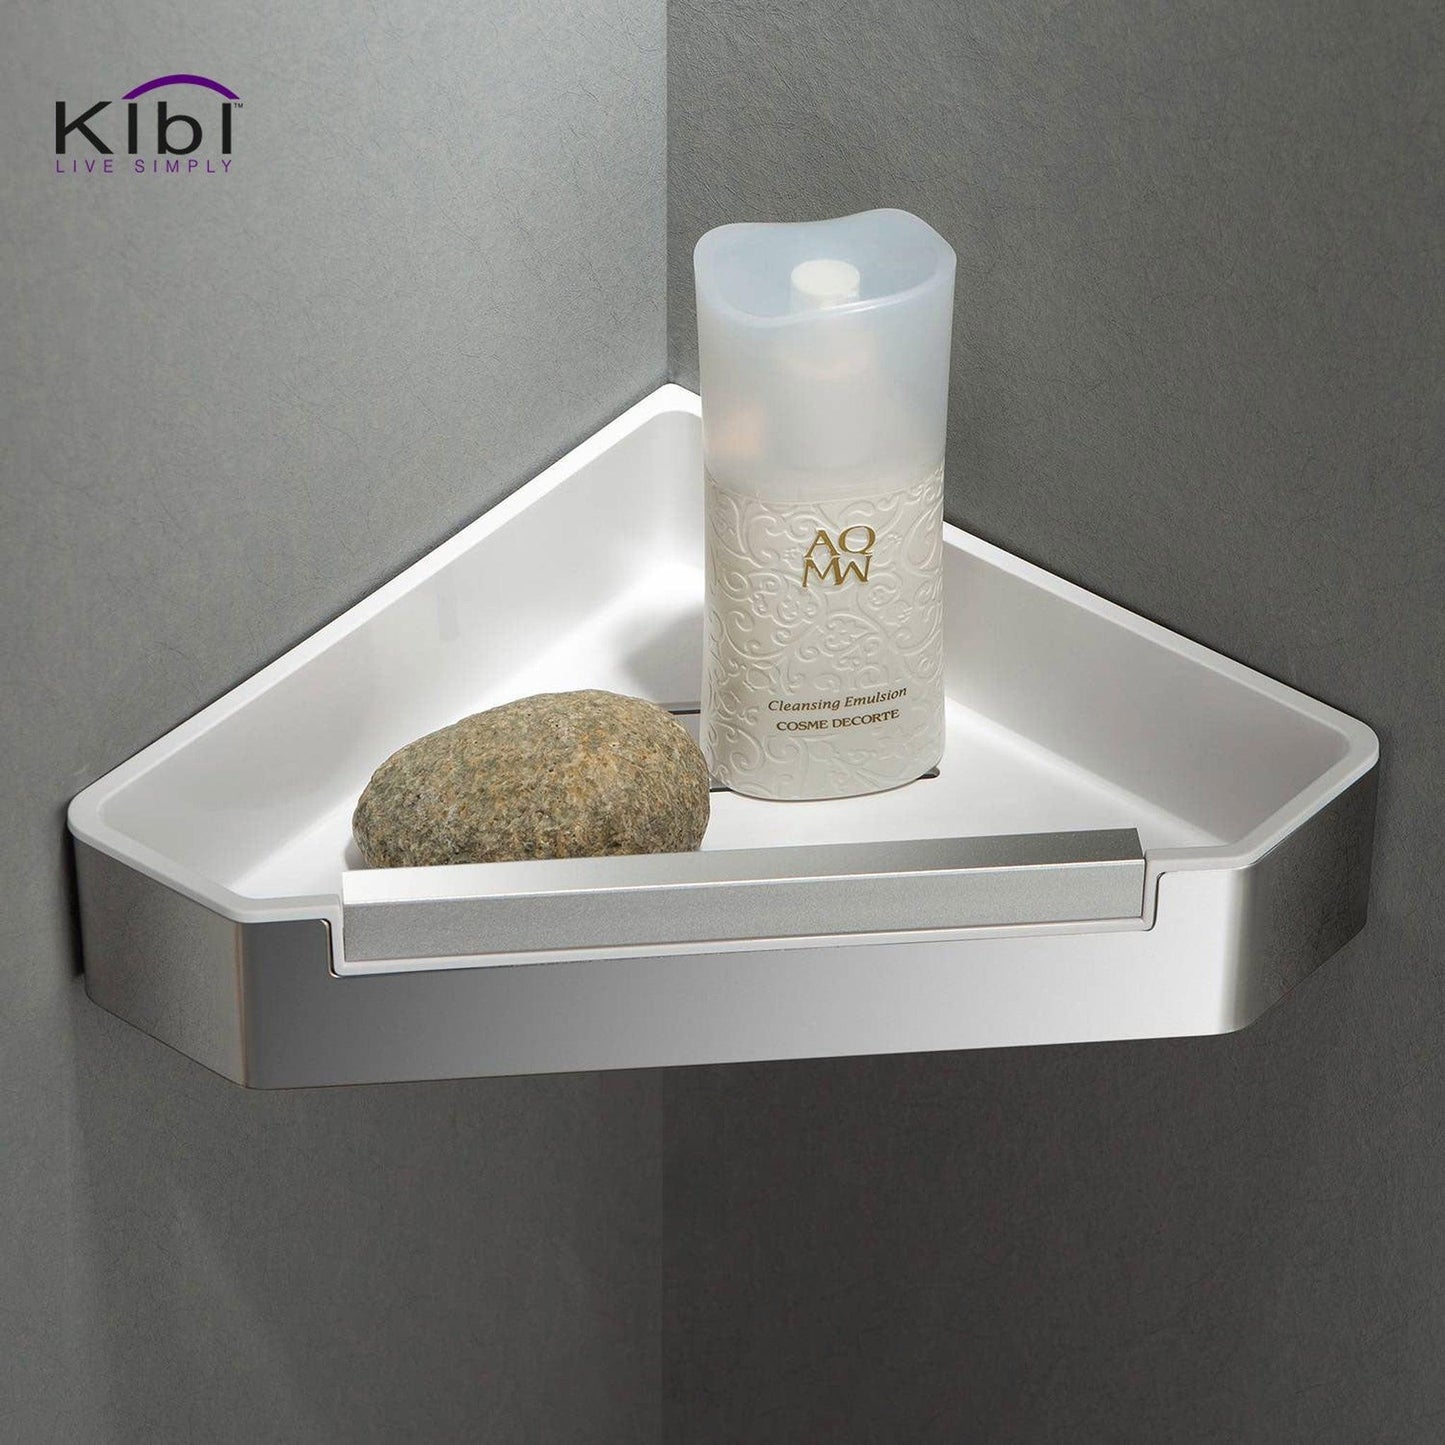 KIBI Deco 9" x 2" Bathroom Corner Basket in Chrome Finish